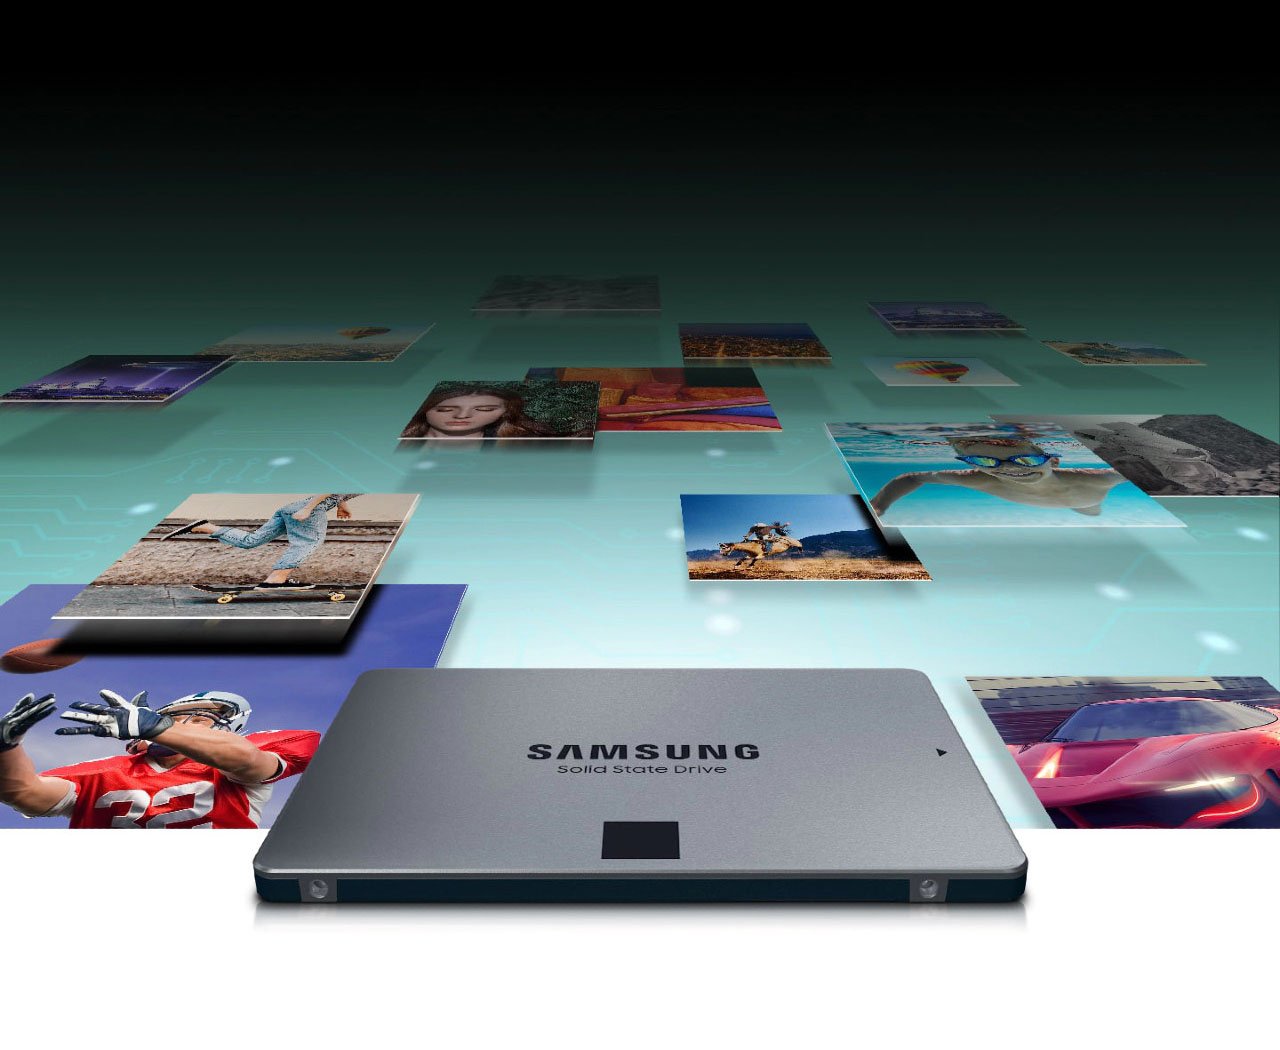 SAMSUNG 870 QVO 4TB Internal SATA SSD 6.35 cm (2.5 Inch) SATA 6 Gb/s Retail  MZ-77Q4T0BW